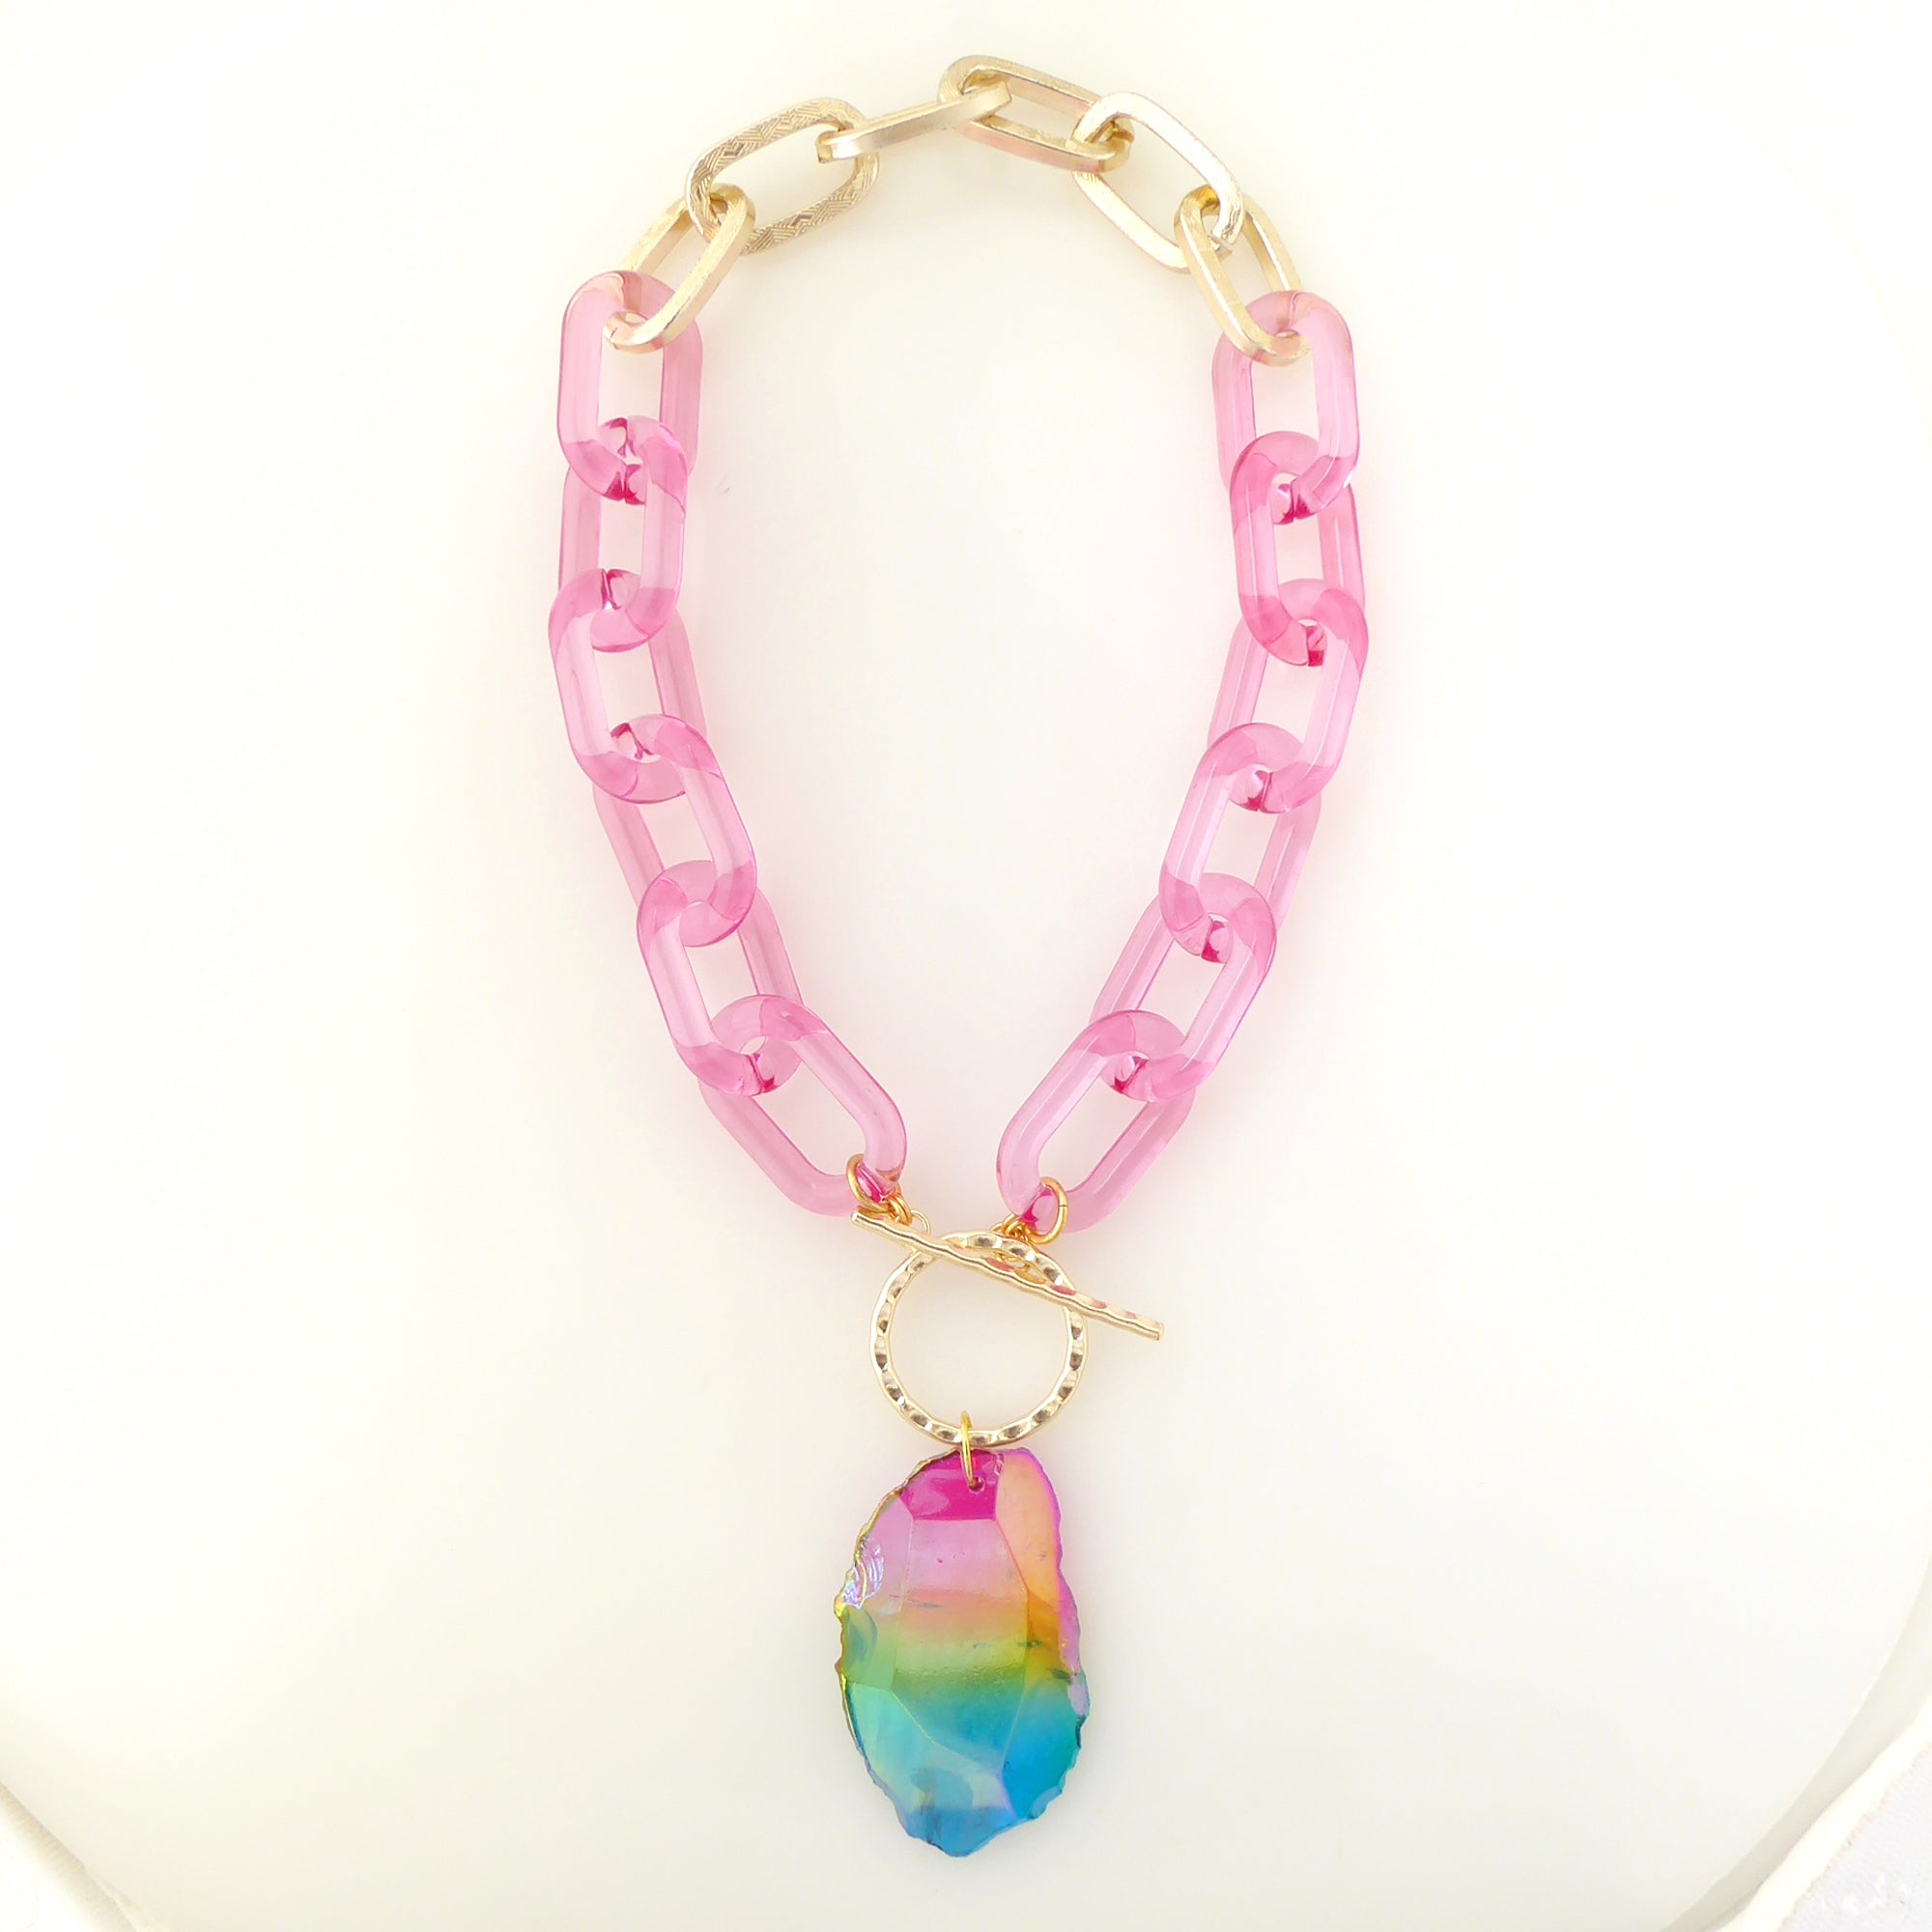 Rainbow agate pendant necklace